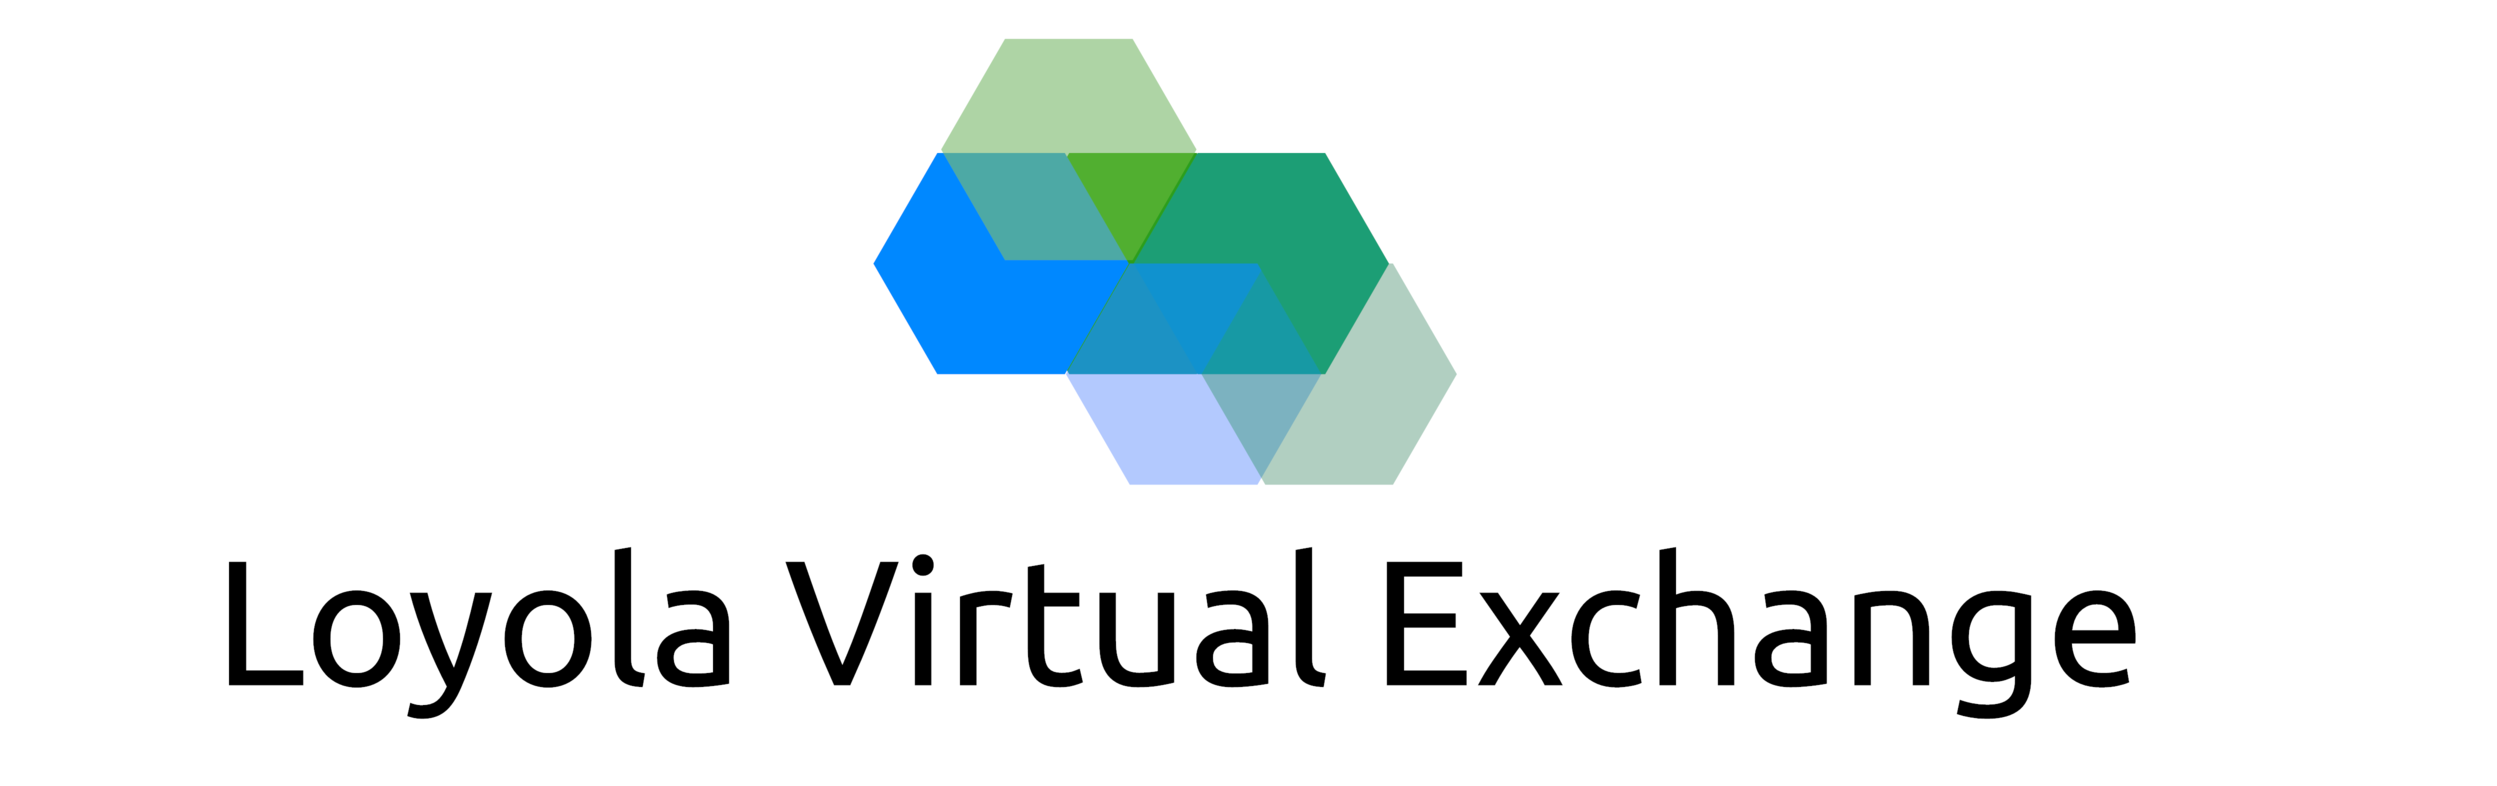 Loyola Virtual Exchange